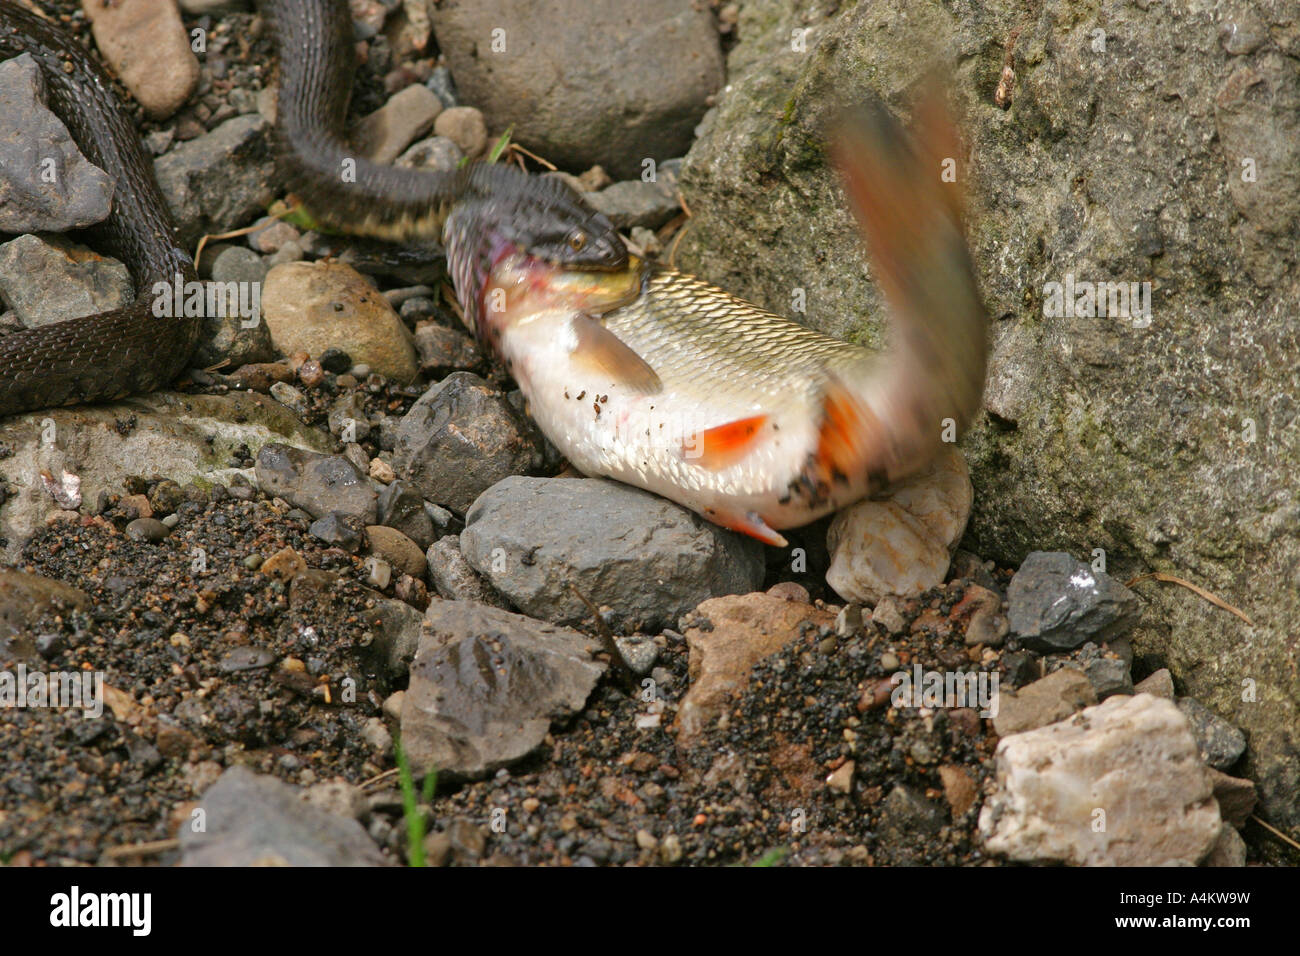 Dice Snake, Natrix tessellata, eats fish Stock Photo